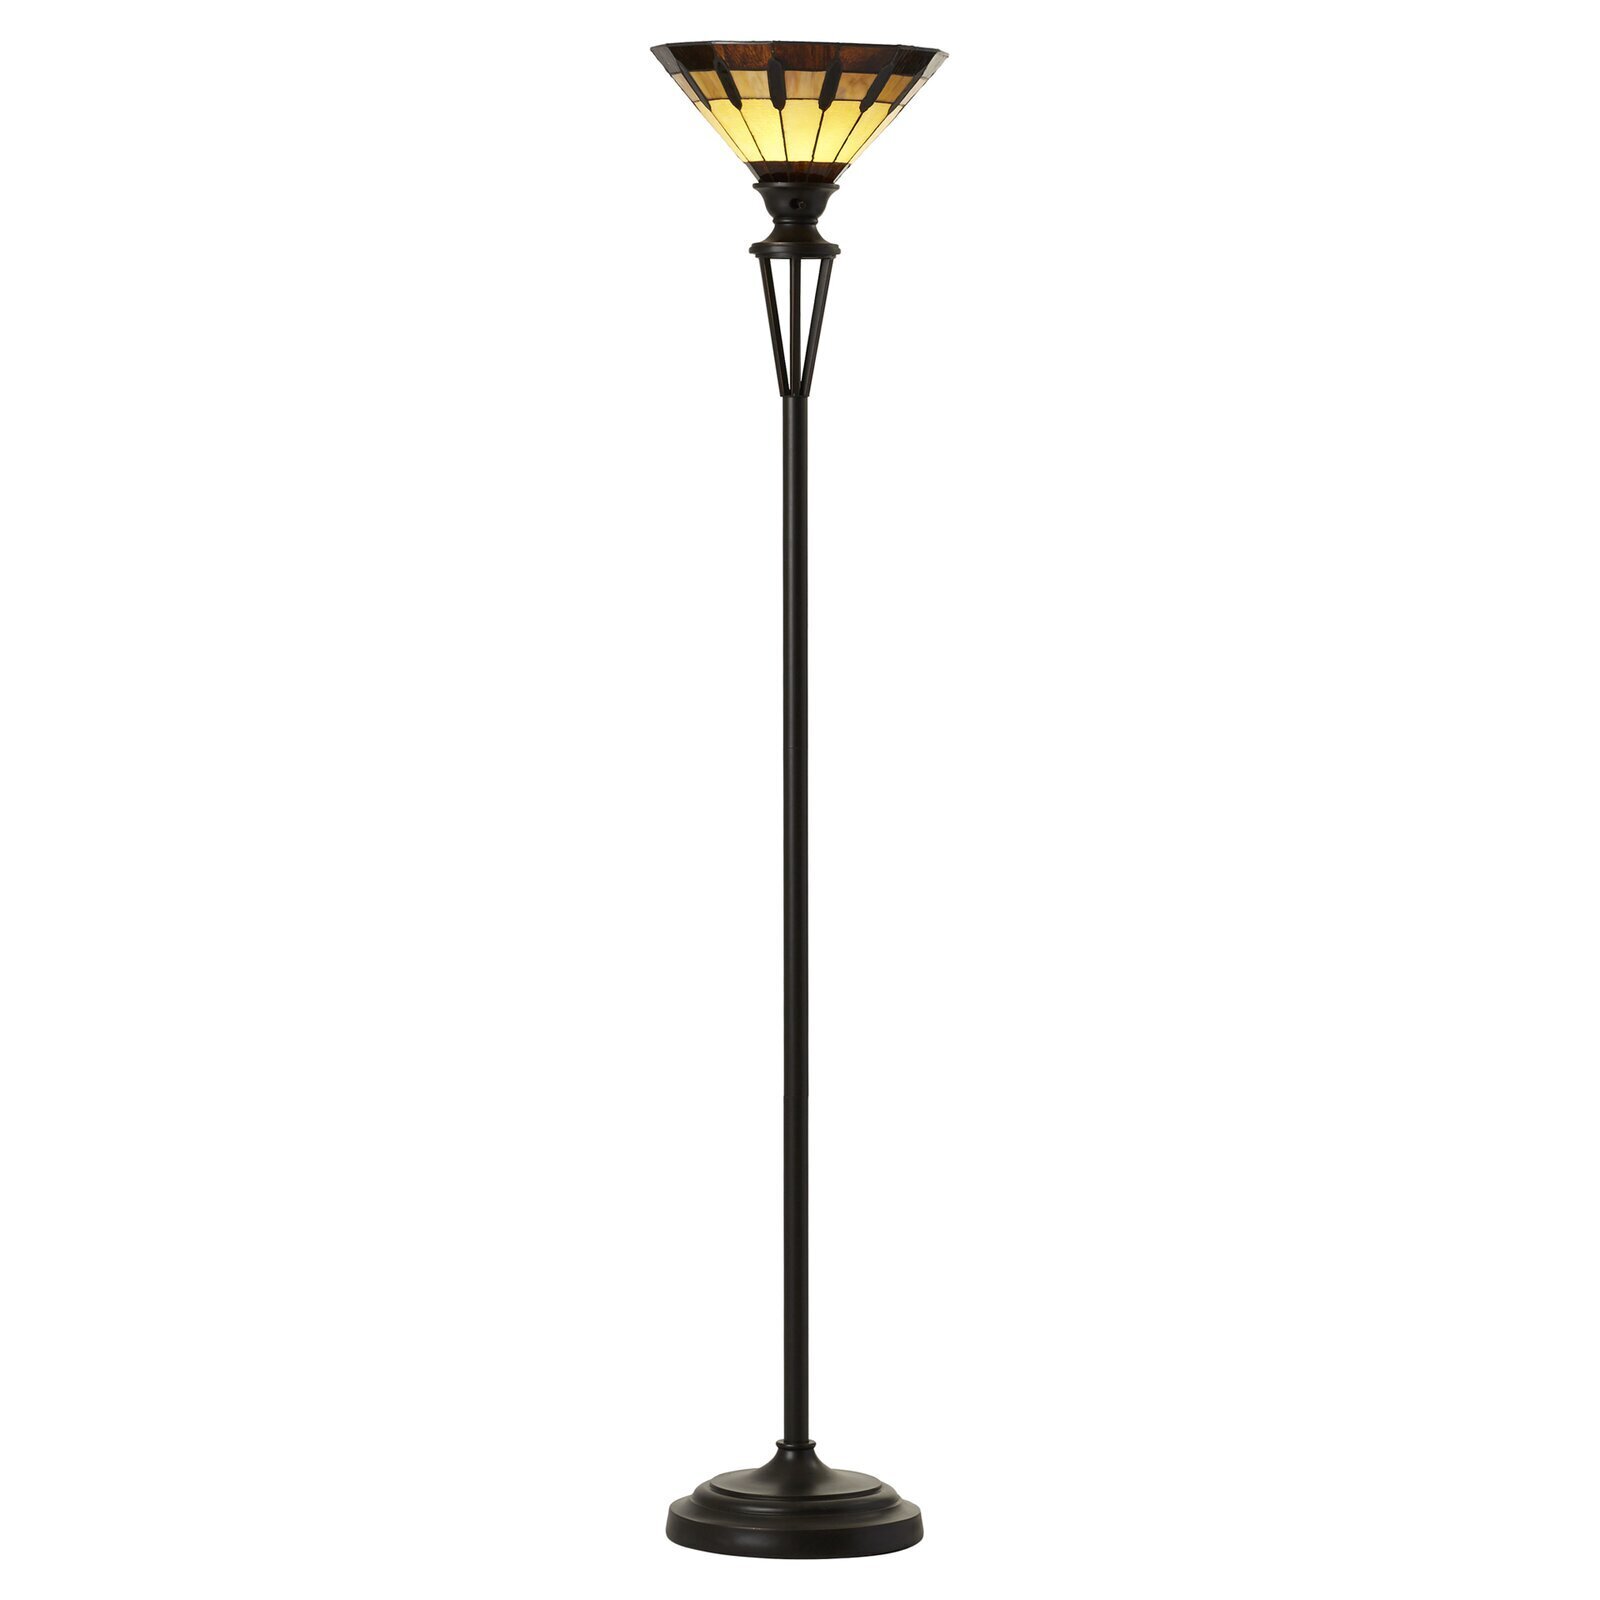 Elegant Upright Bourbon Street Lamp Post